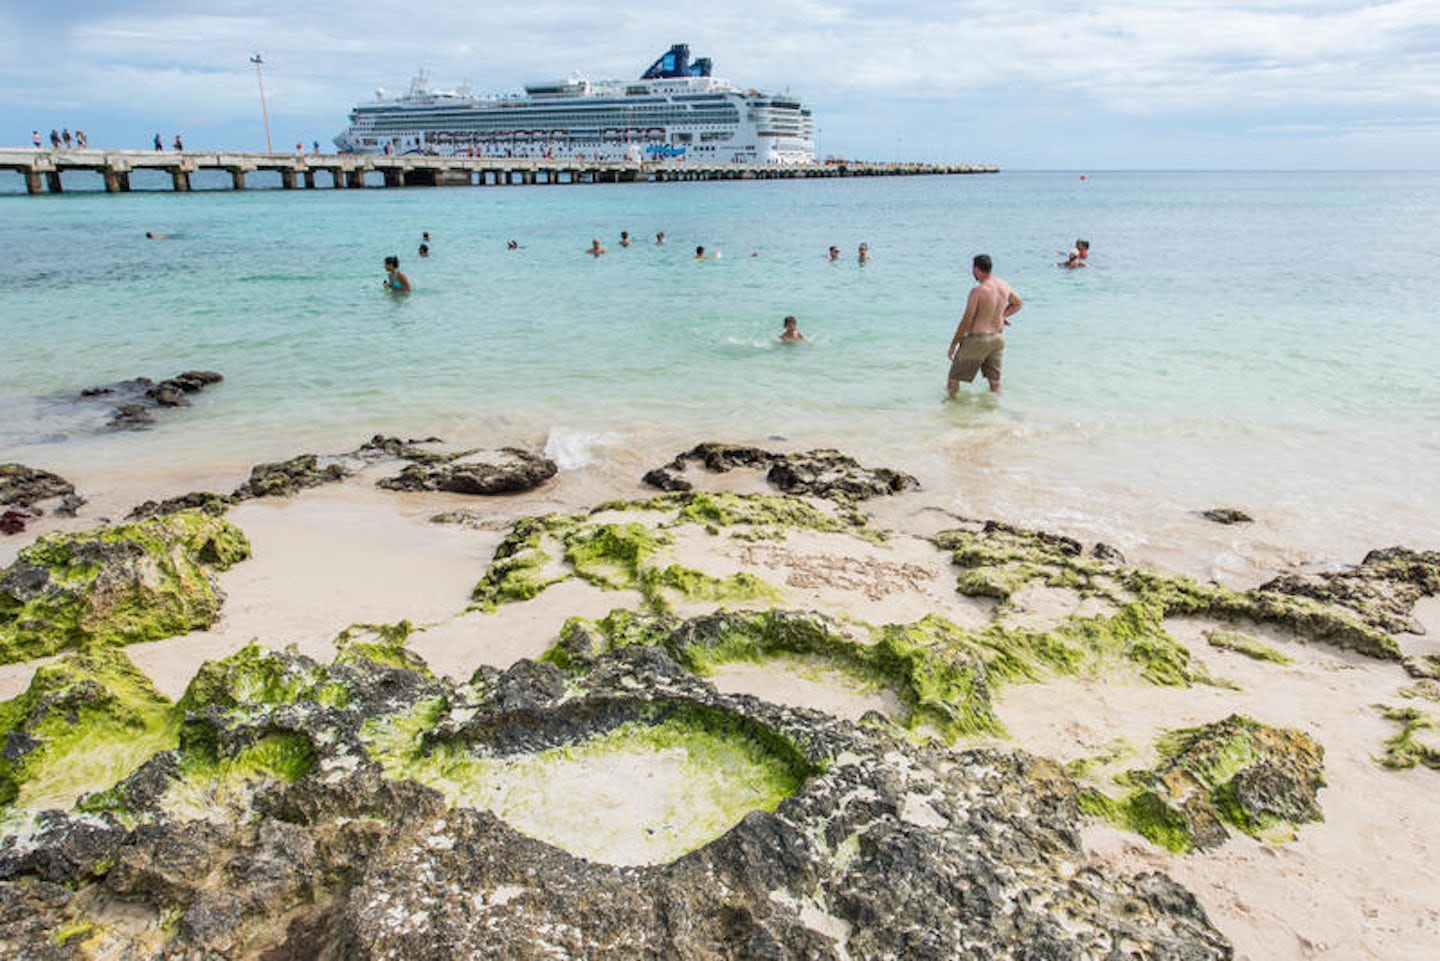 Costa Maya Cruise Port